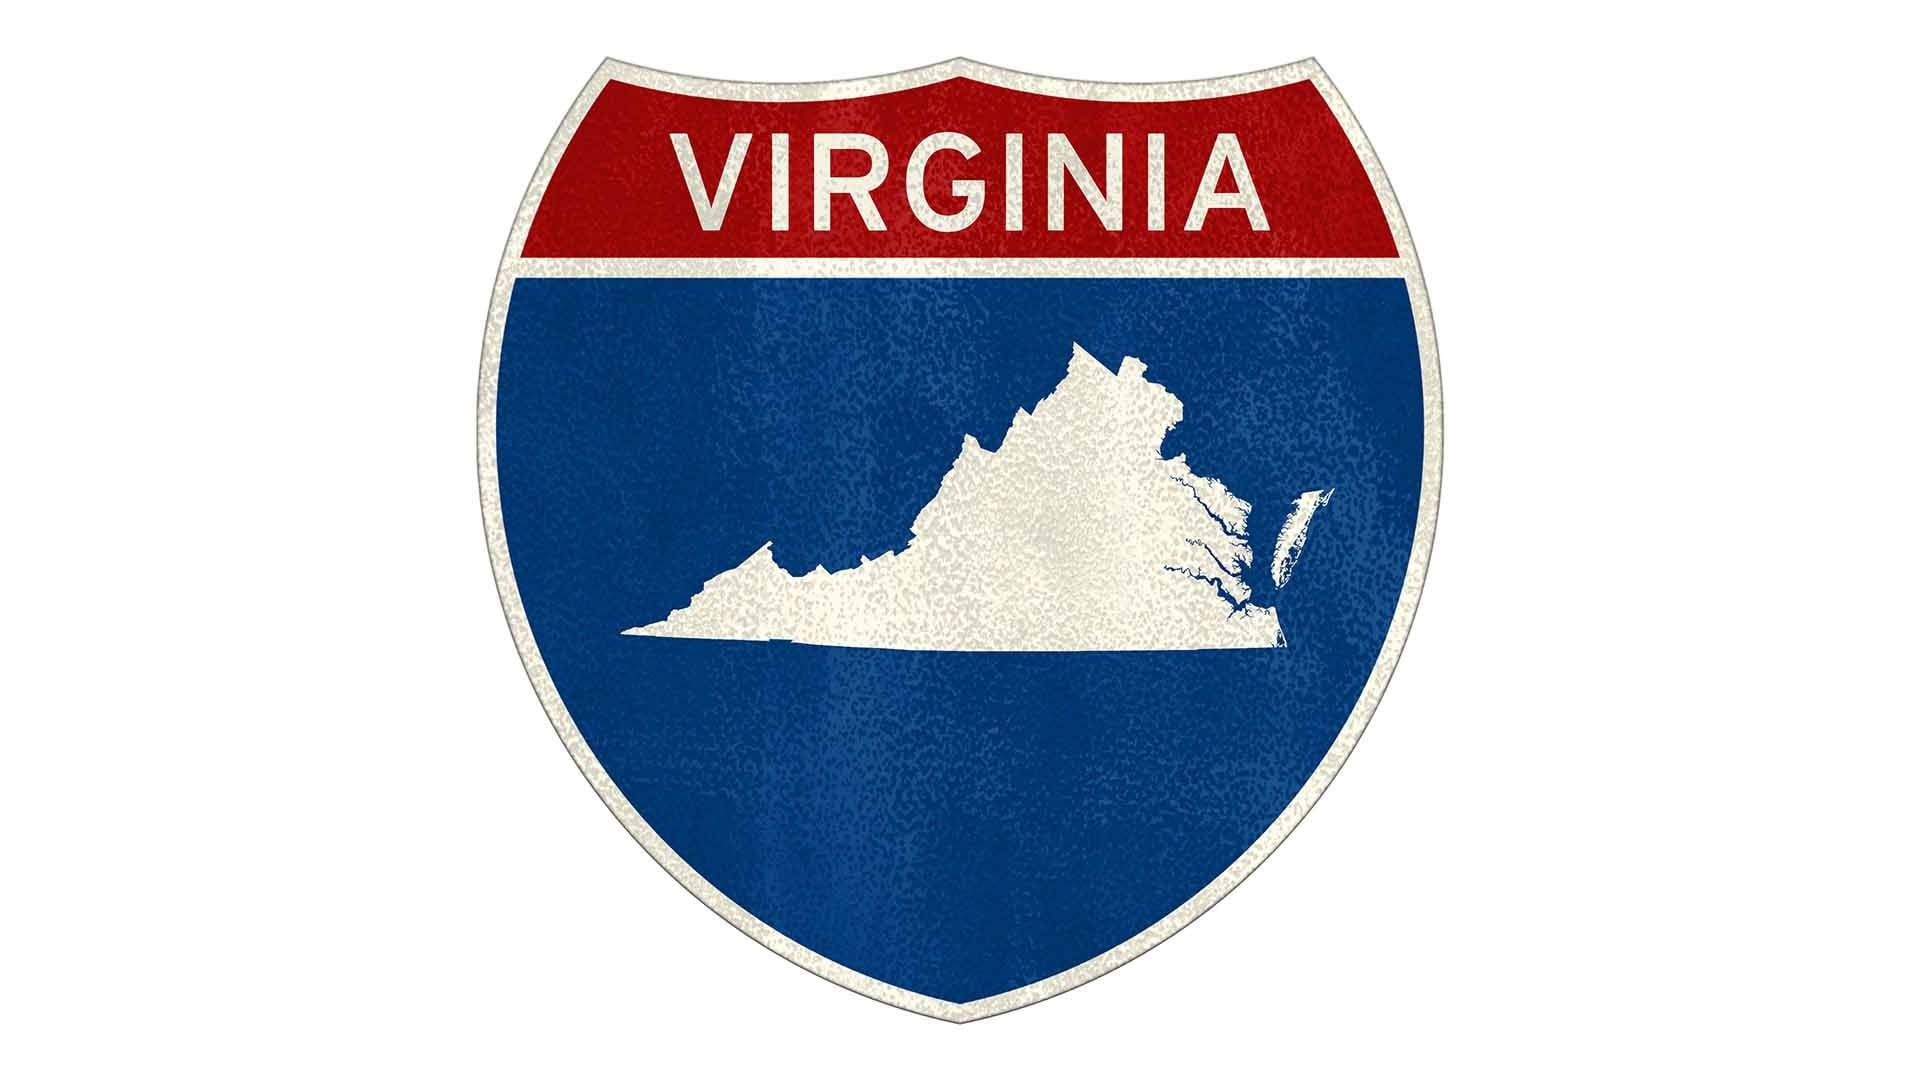 Virginia state roadside sign